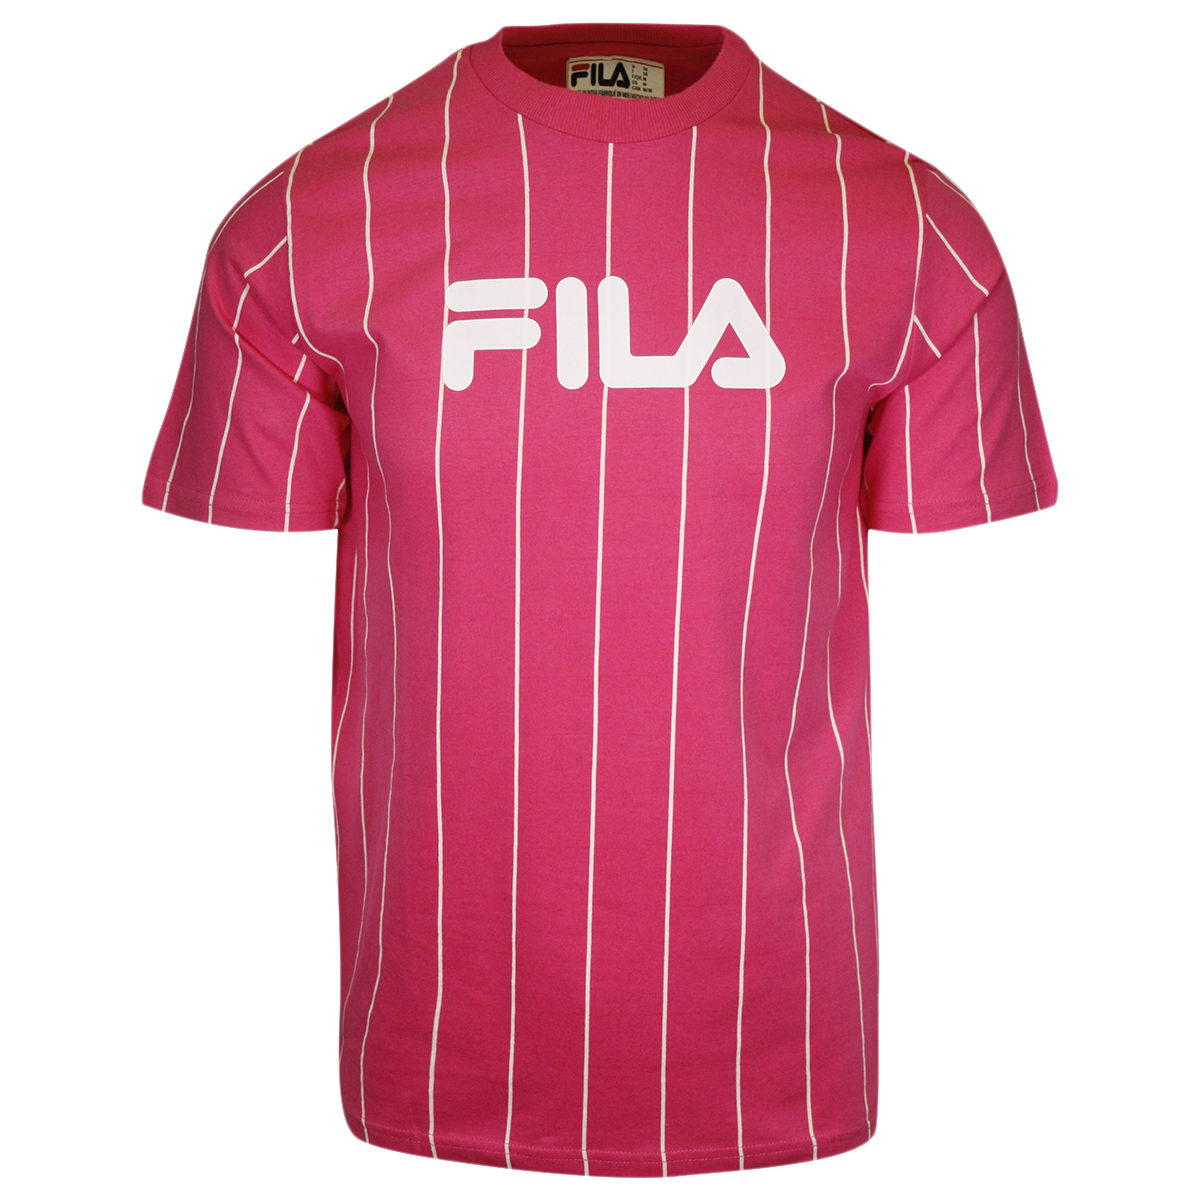 FILA Men's Pink & White Striped Logo S/S T-Shirt (163)